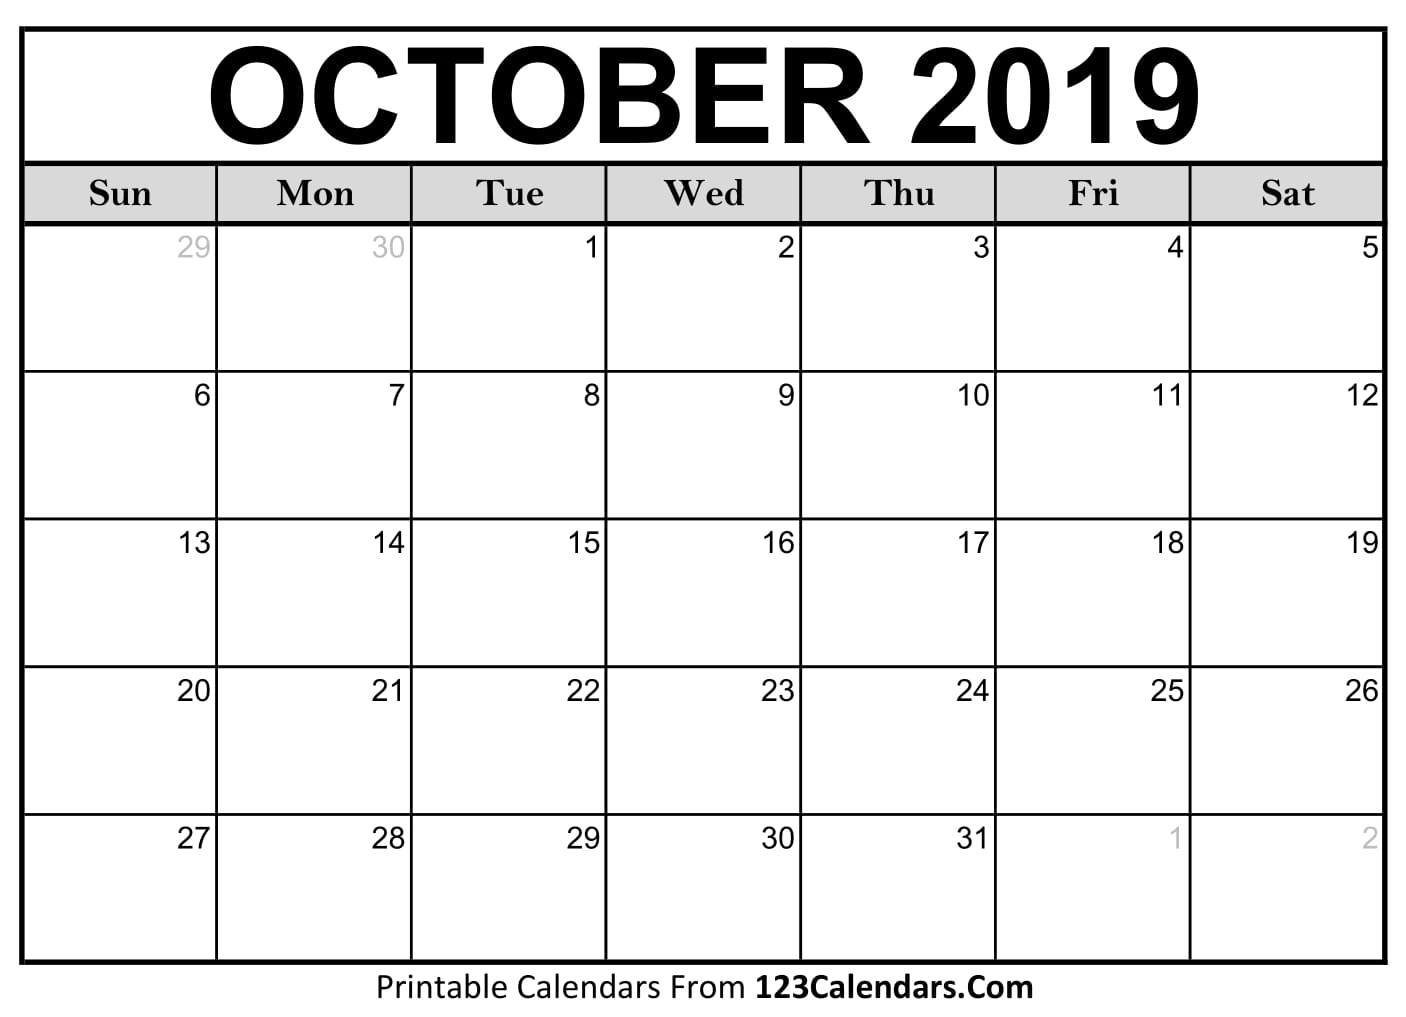 October 2019 Printable Calendar | 123Calendars